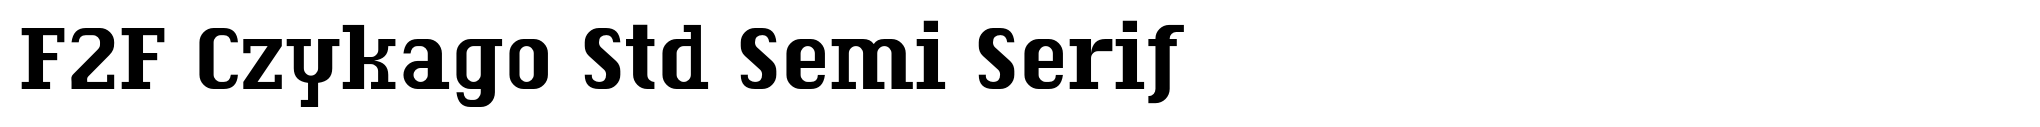 F2F Czykago Std Semi Serif image